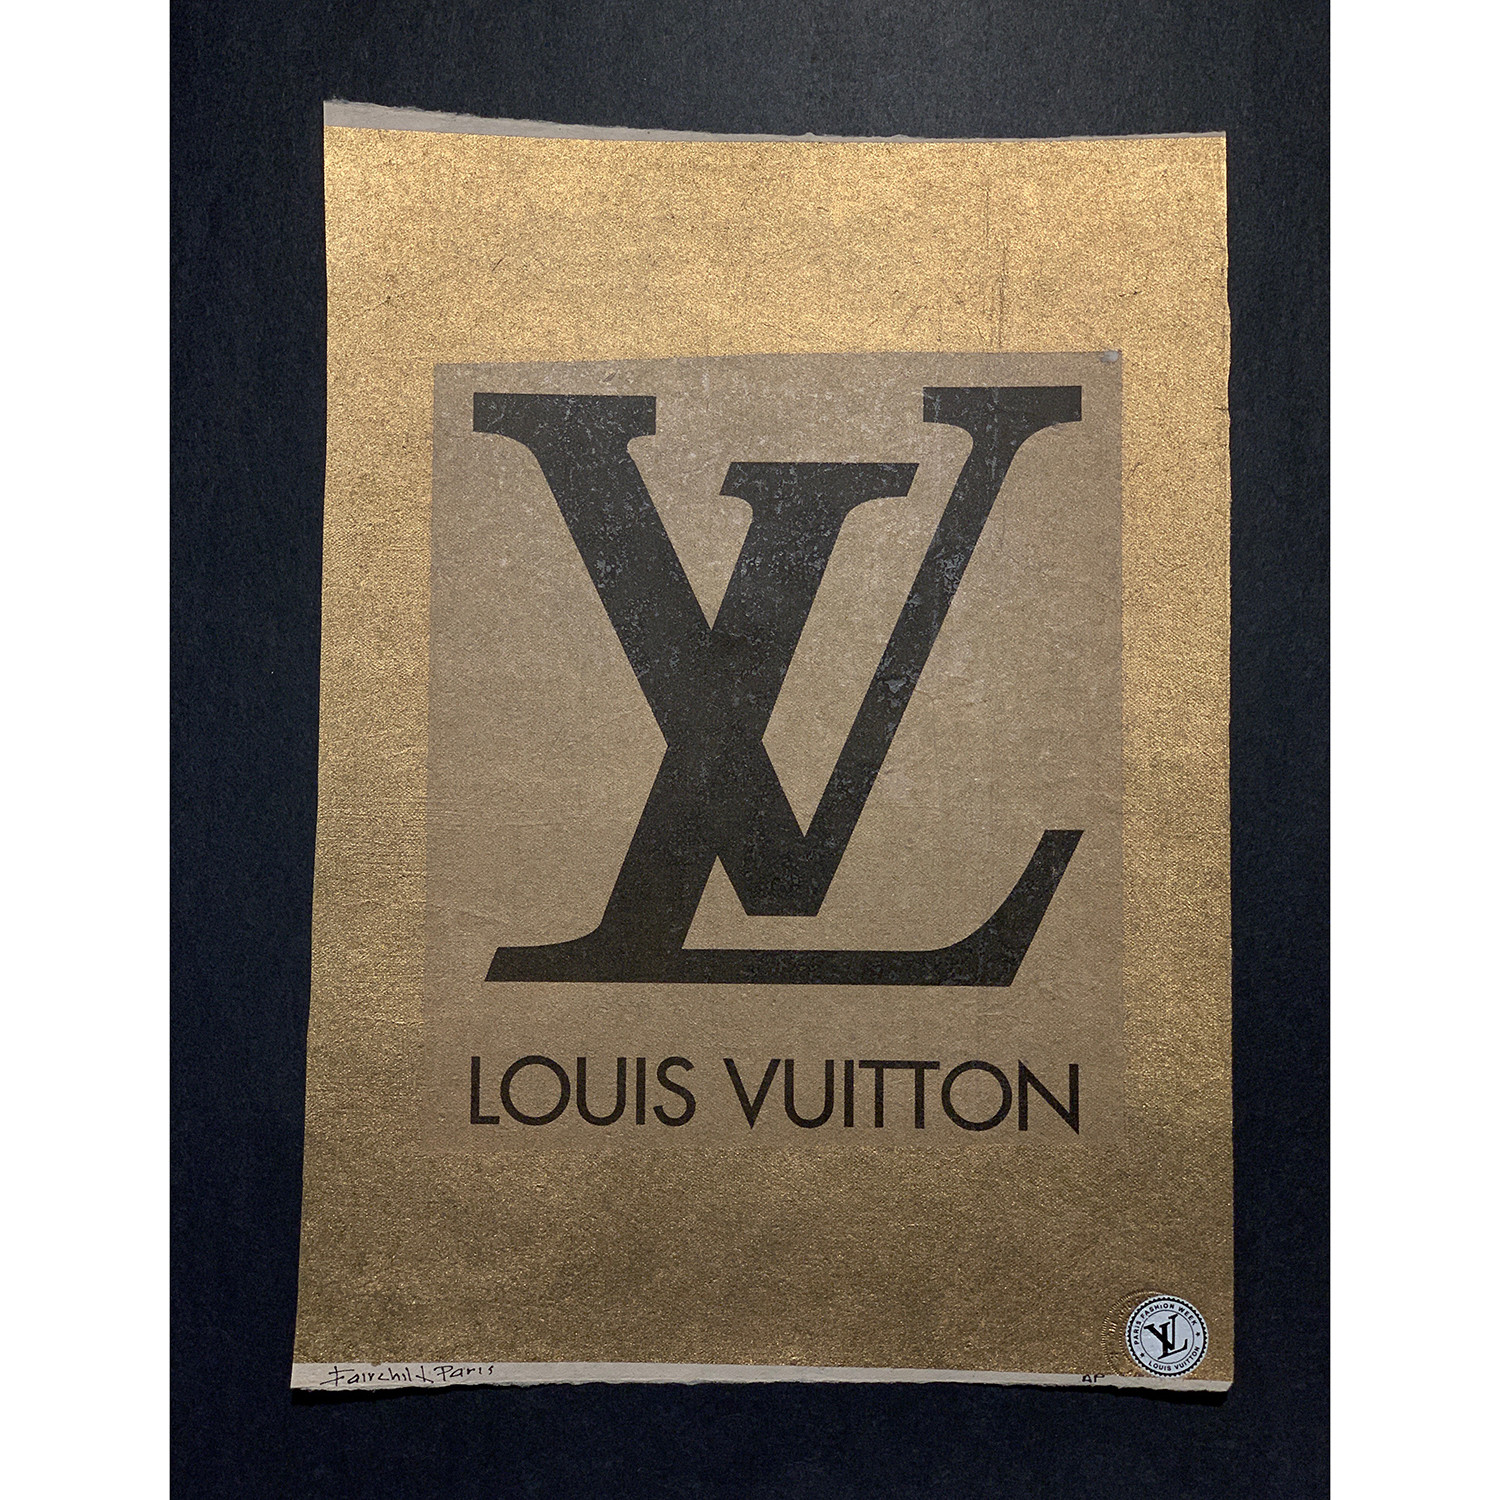 Louis Vuitton Logo Font Free | IQS Executive